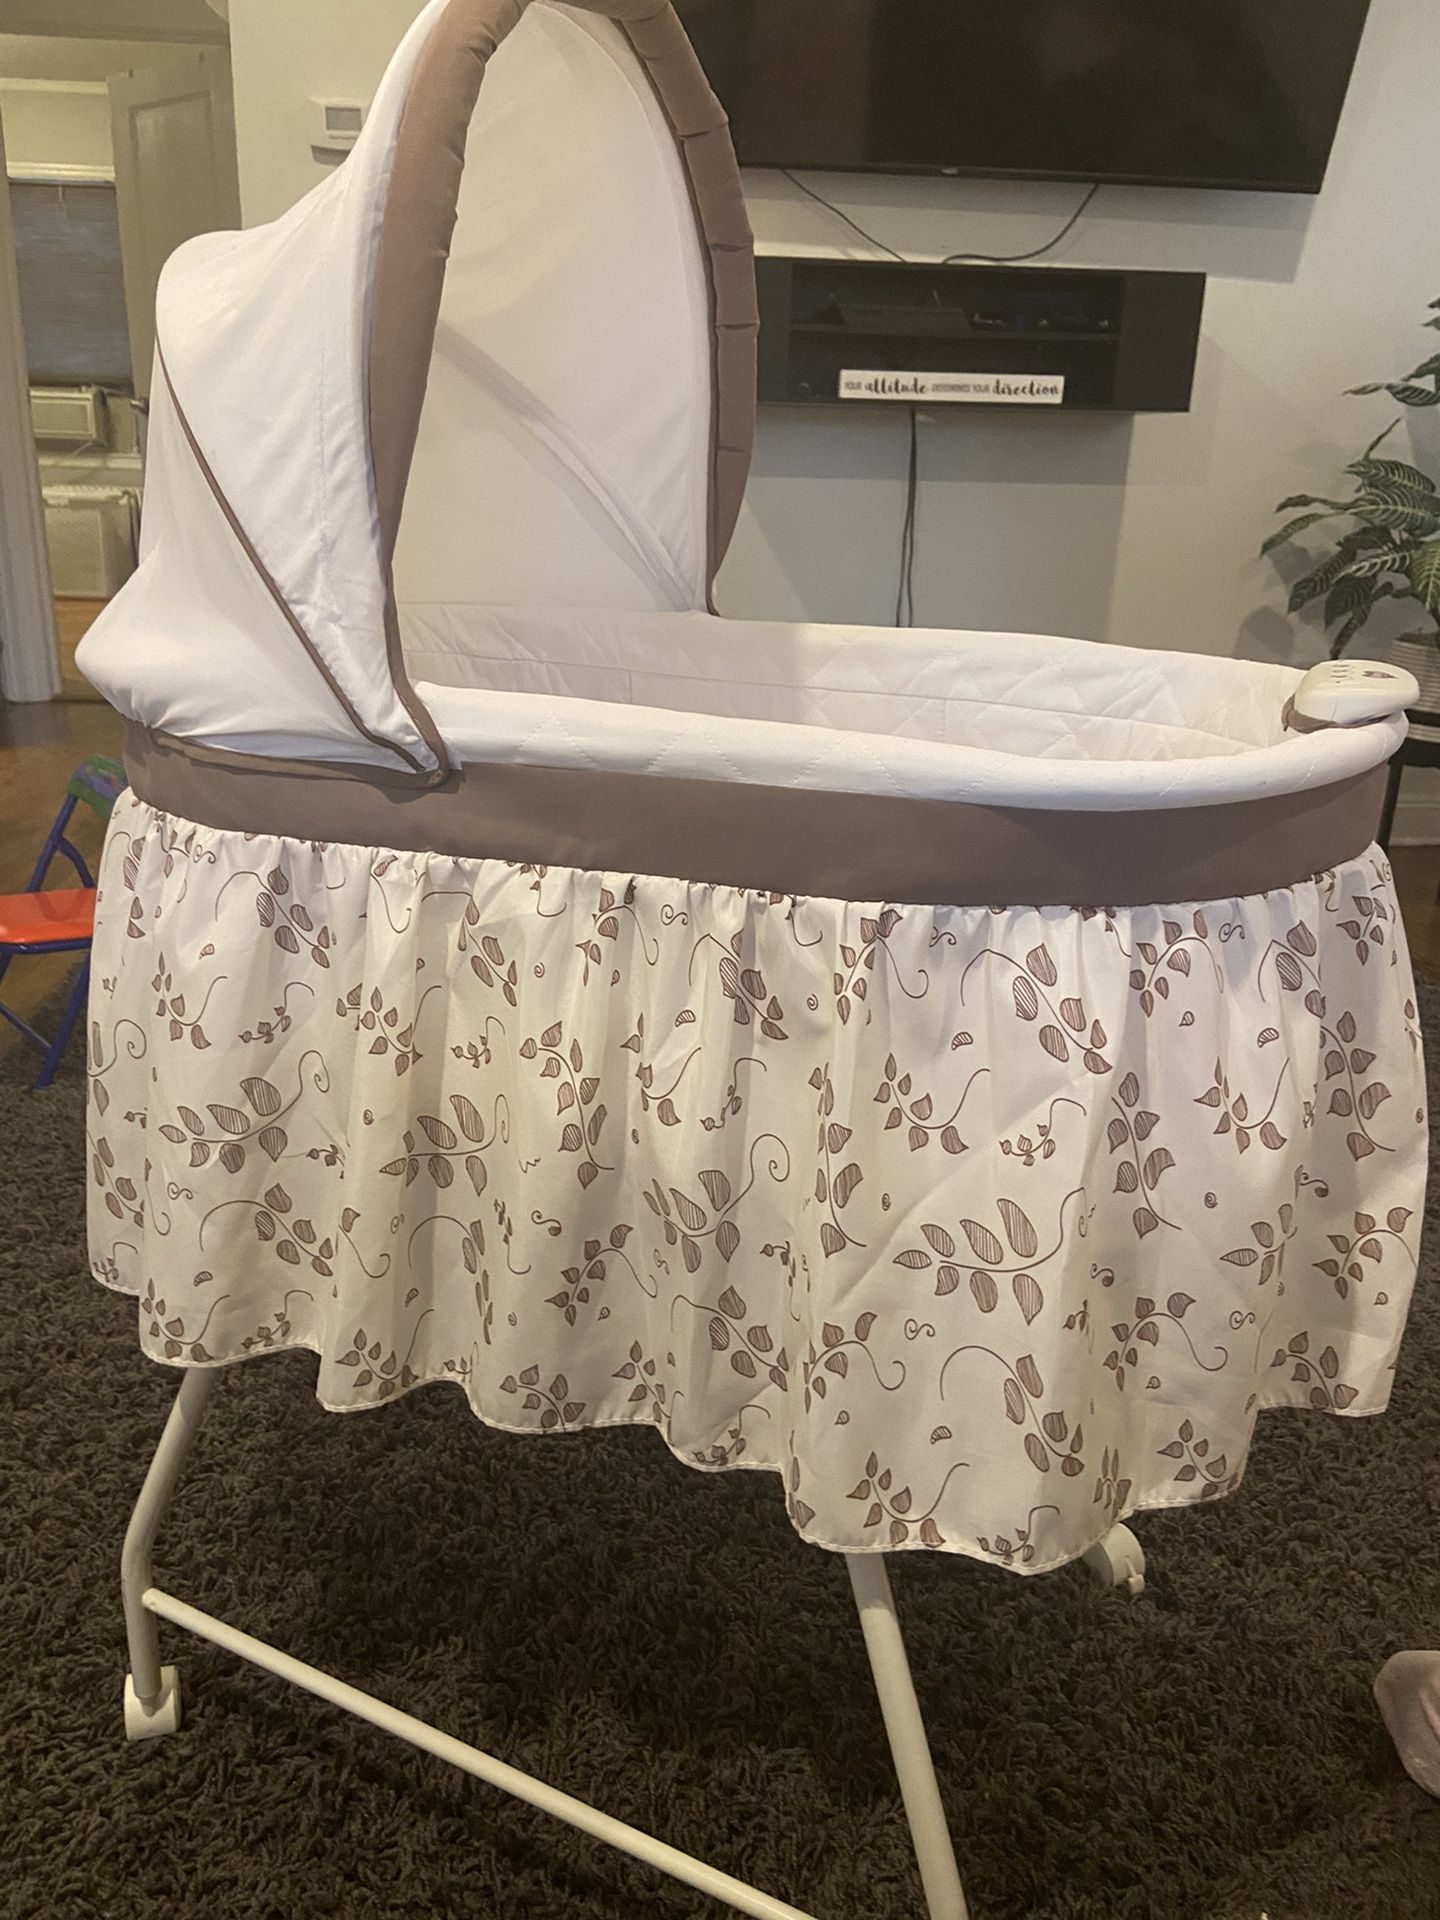 Free infant bassinet